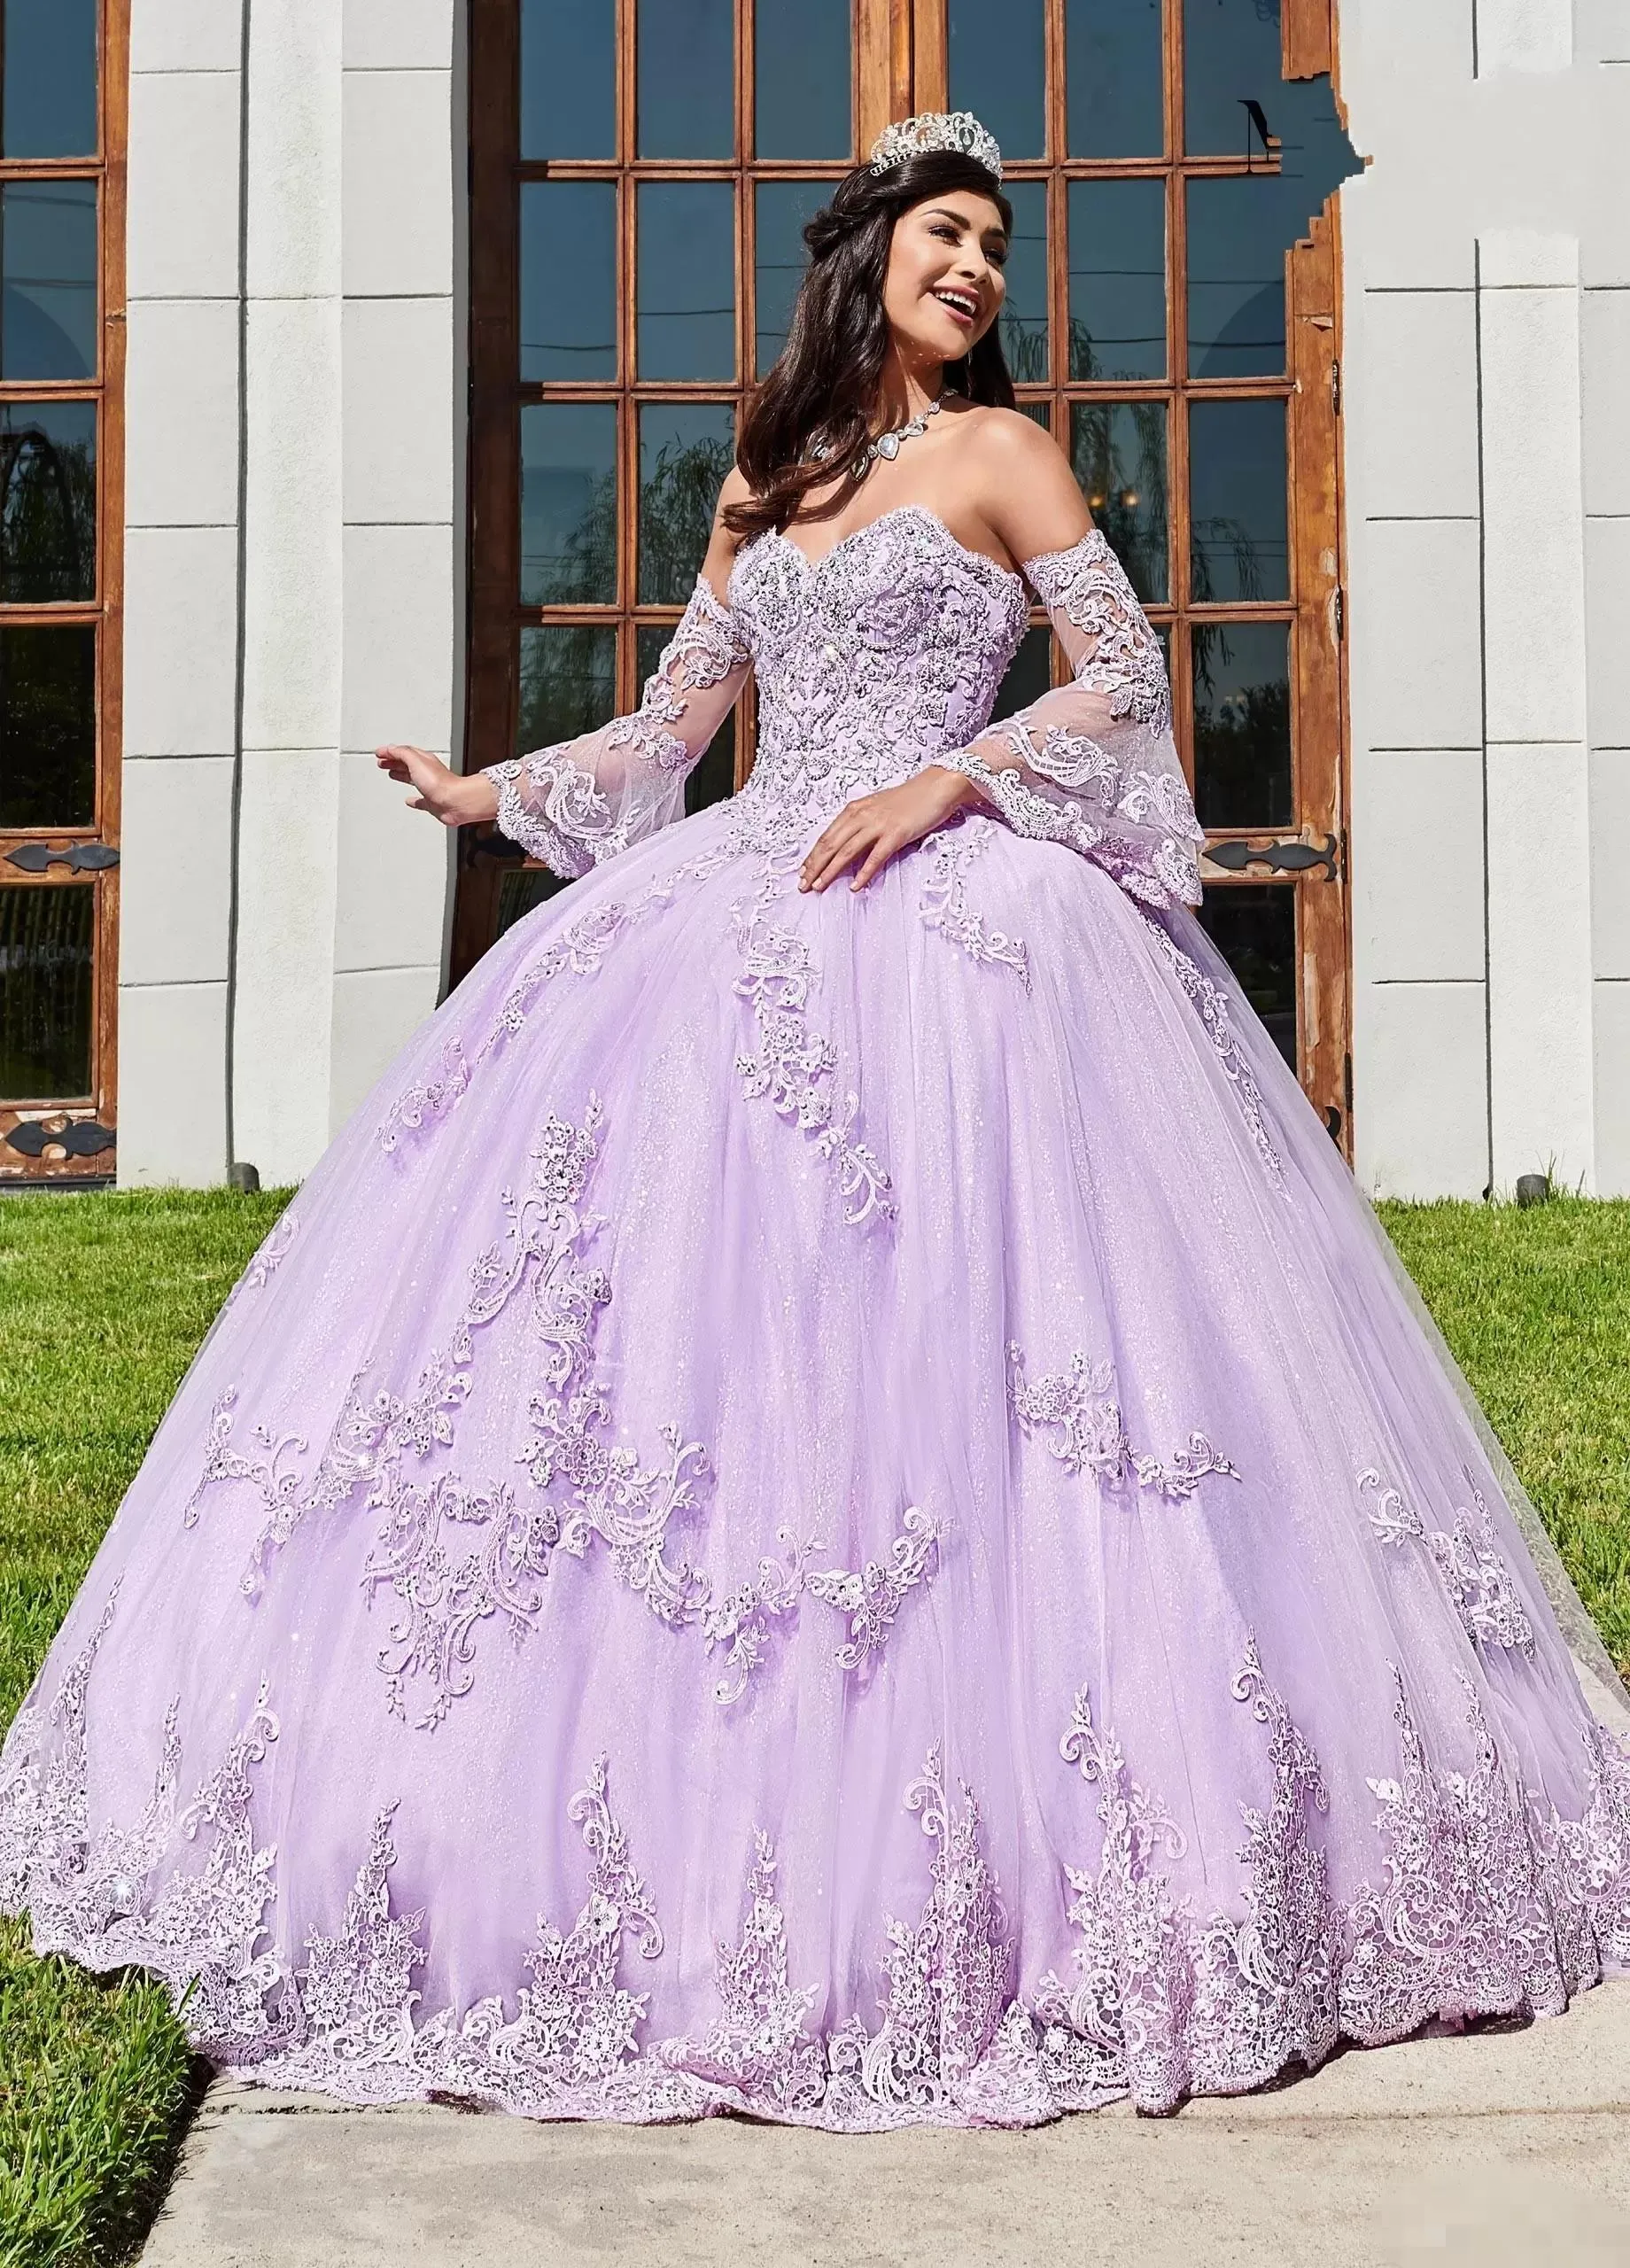 Exquisite High-Neck Long Sleeve Elegant Wedding Gown – HAREM's Brides